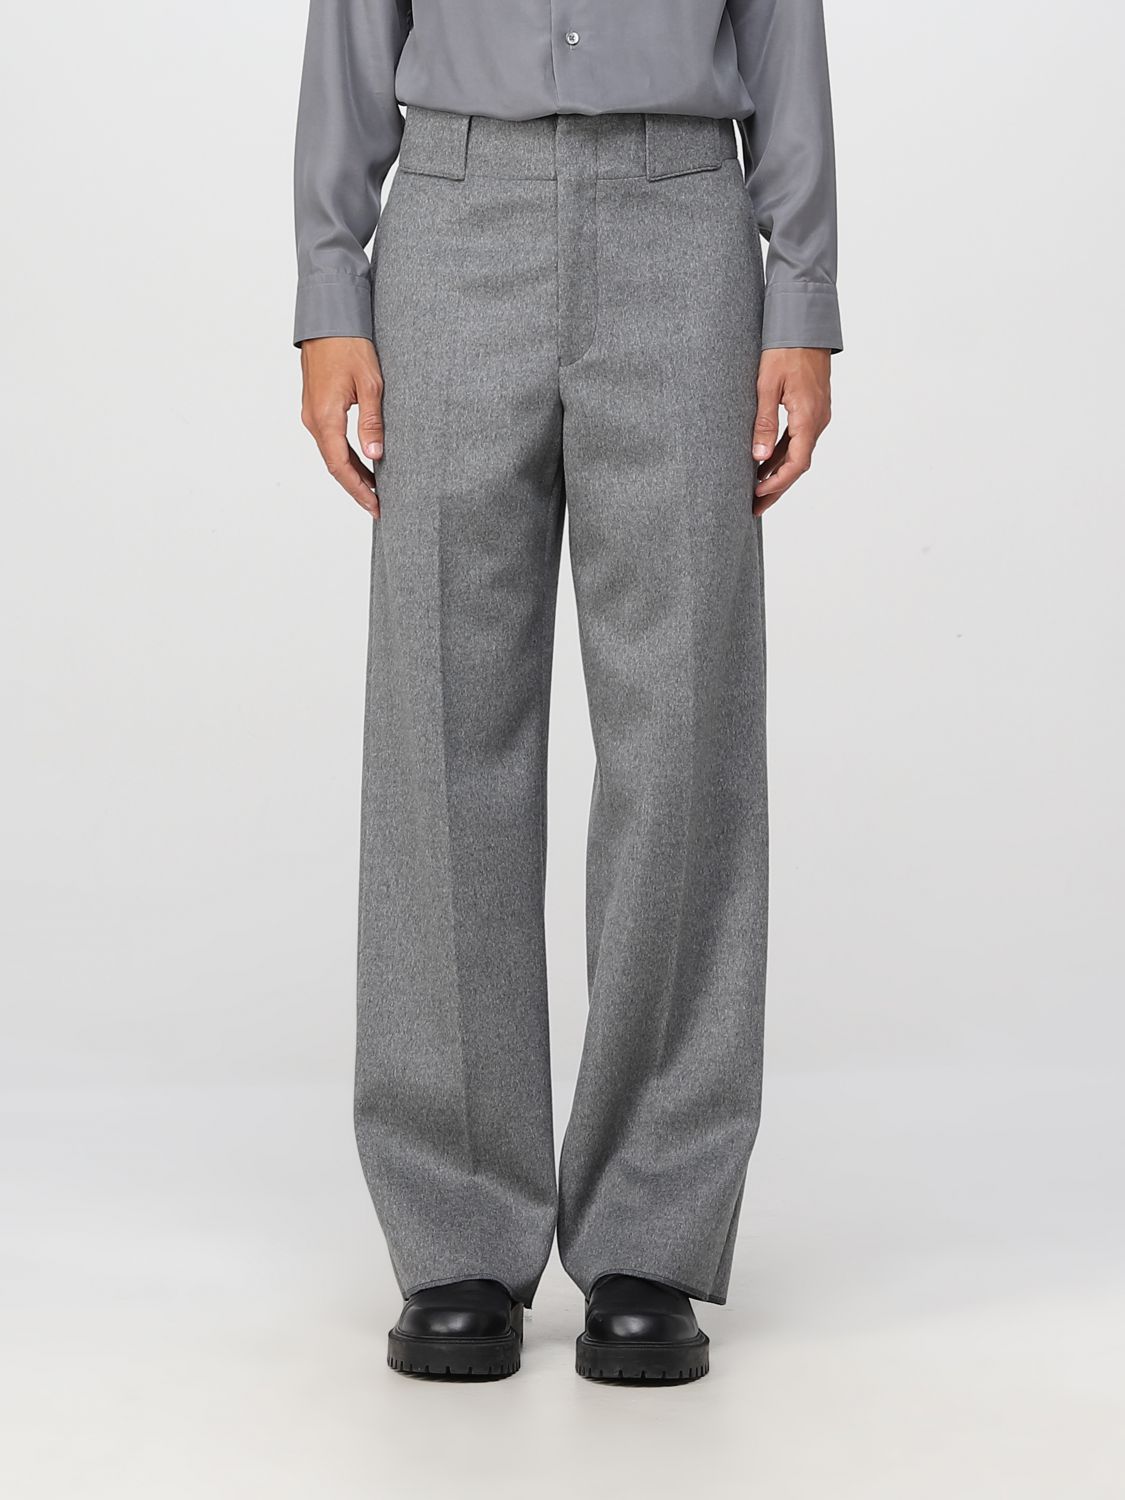 Formal pants for men's - Men - 1743015617